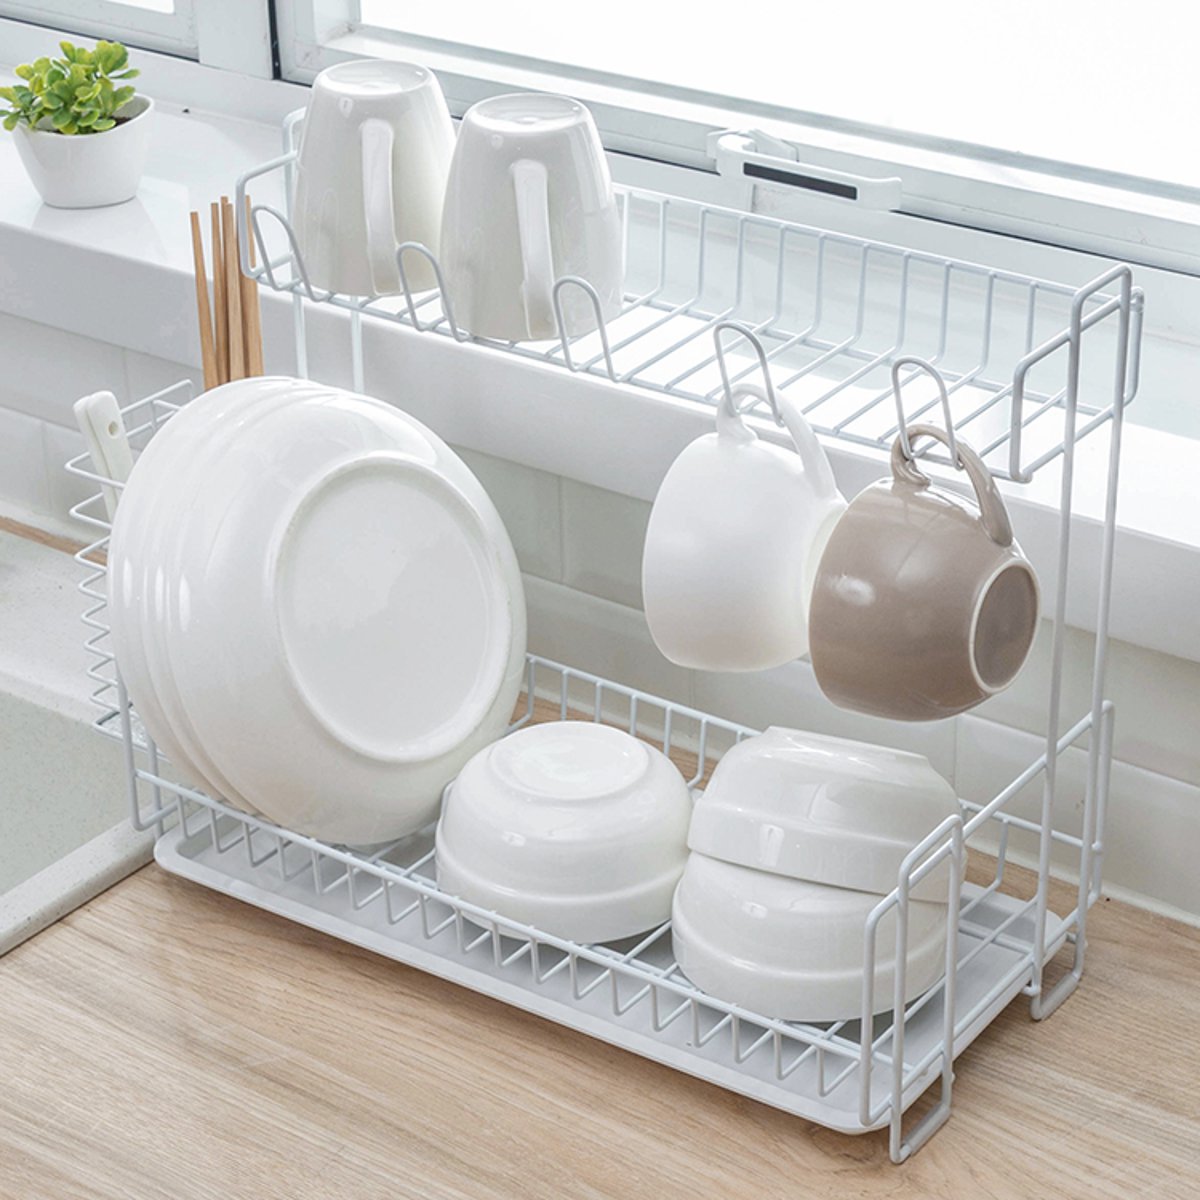 Dish-Drainer-Kitchen-Drying-Drain-Shelf-Sink-Holder-Cup-Bowl-Storage-Home-Basket-Stand-1608286-3